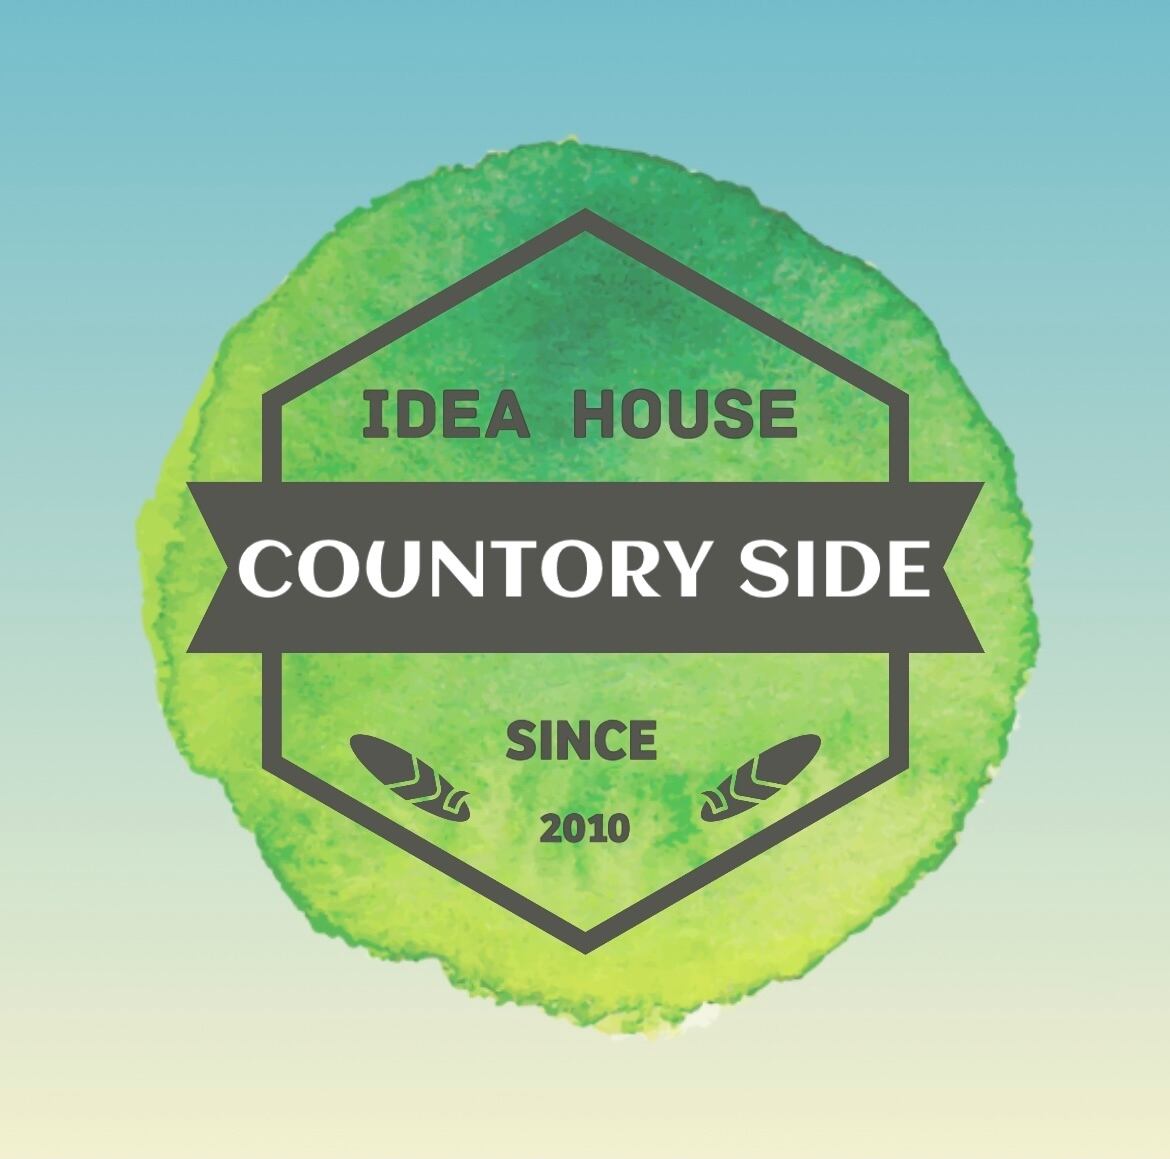 IDEA HOUSE COUNTORYSIDE